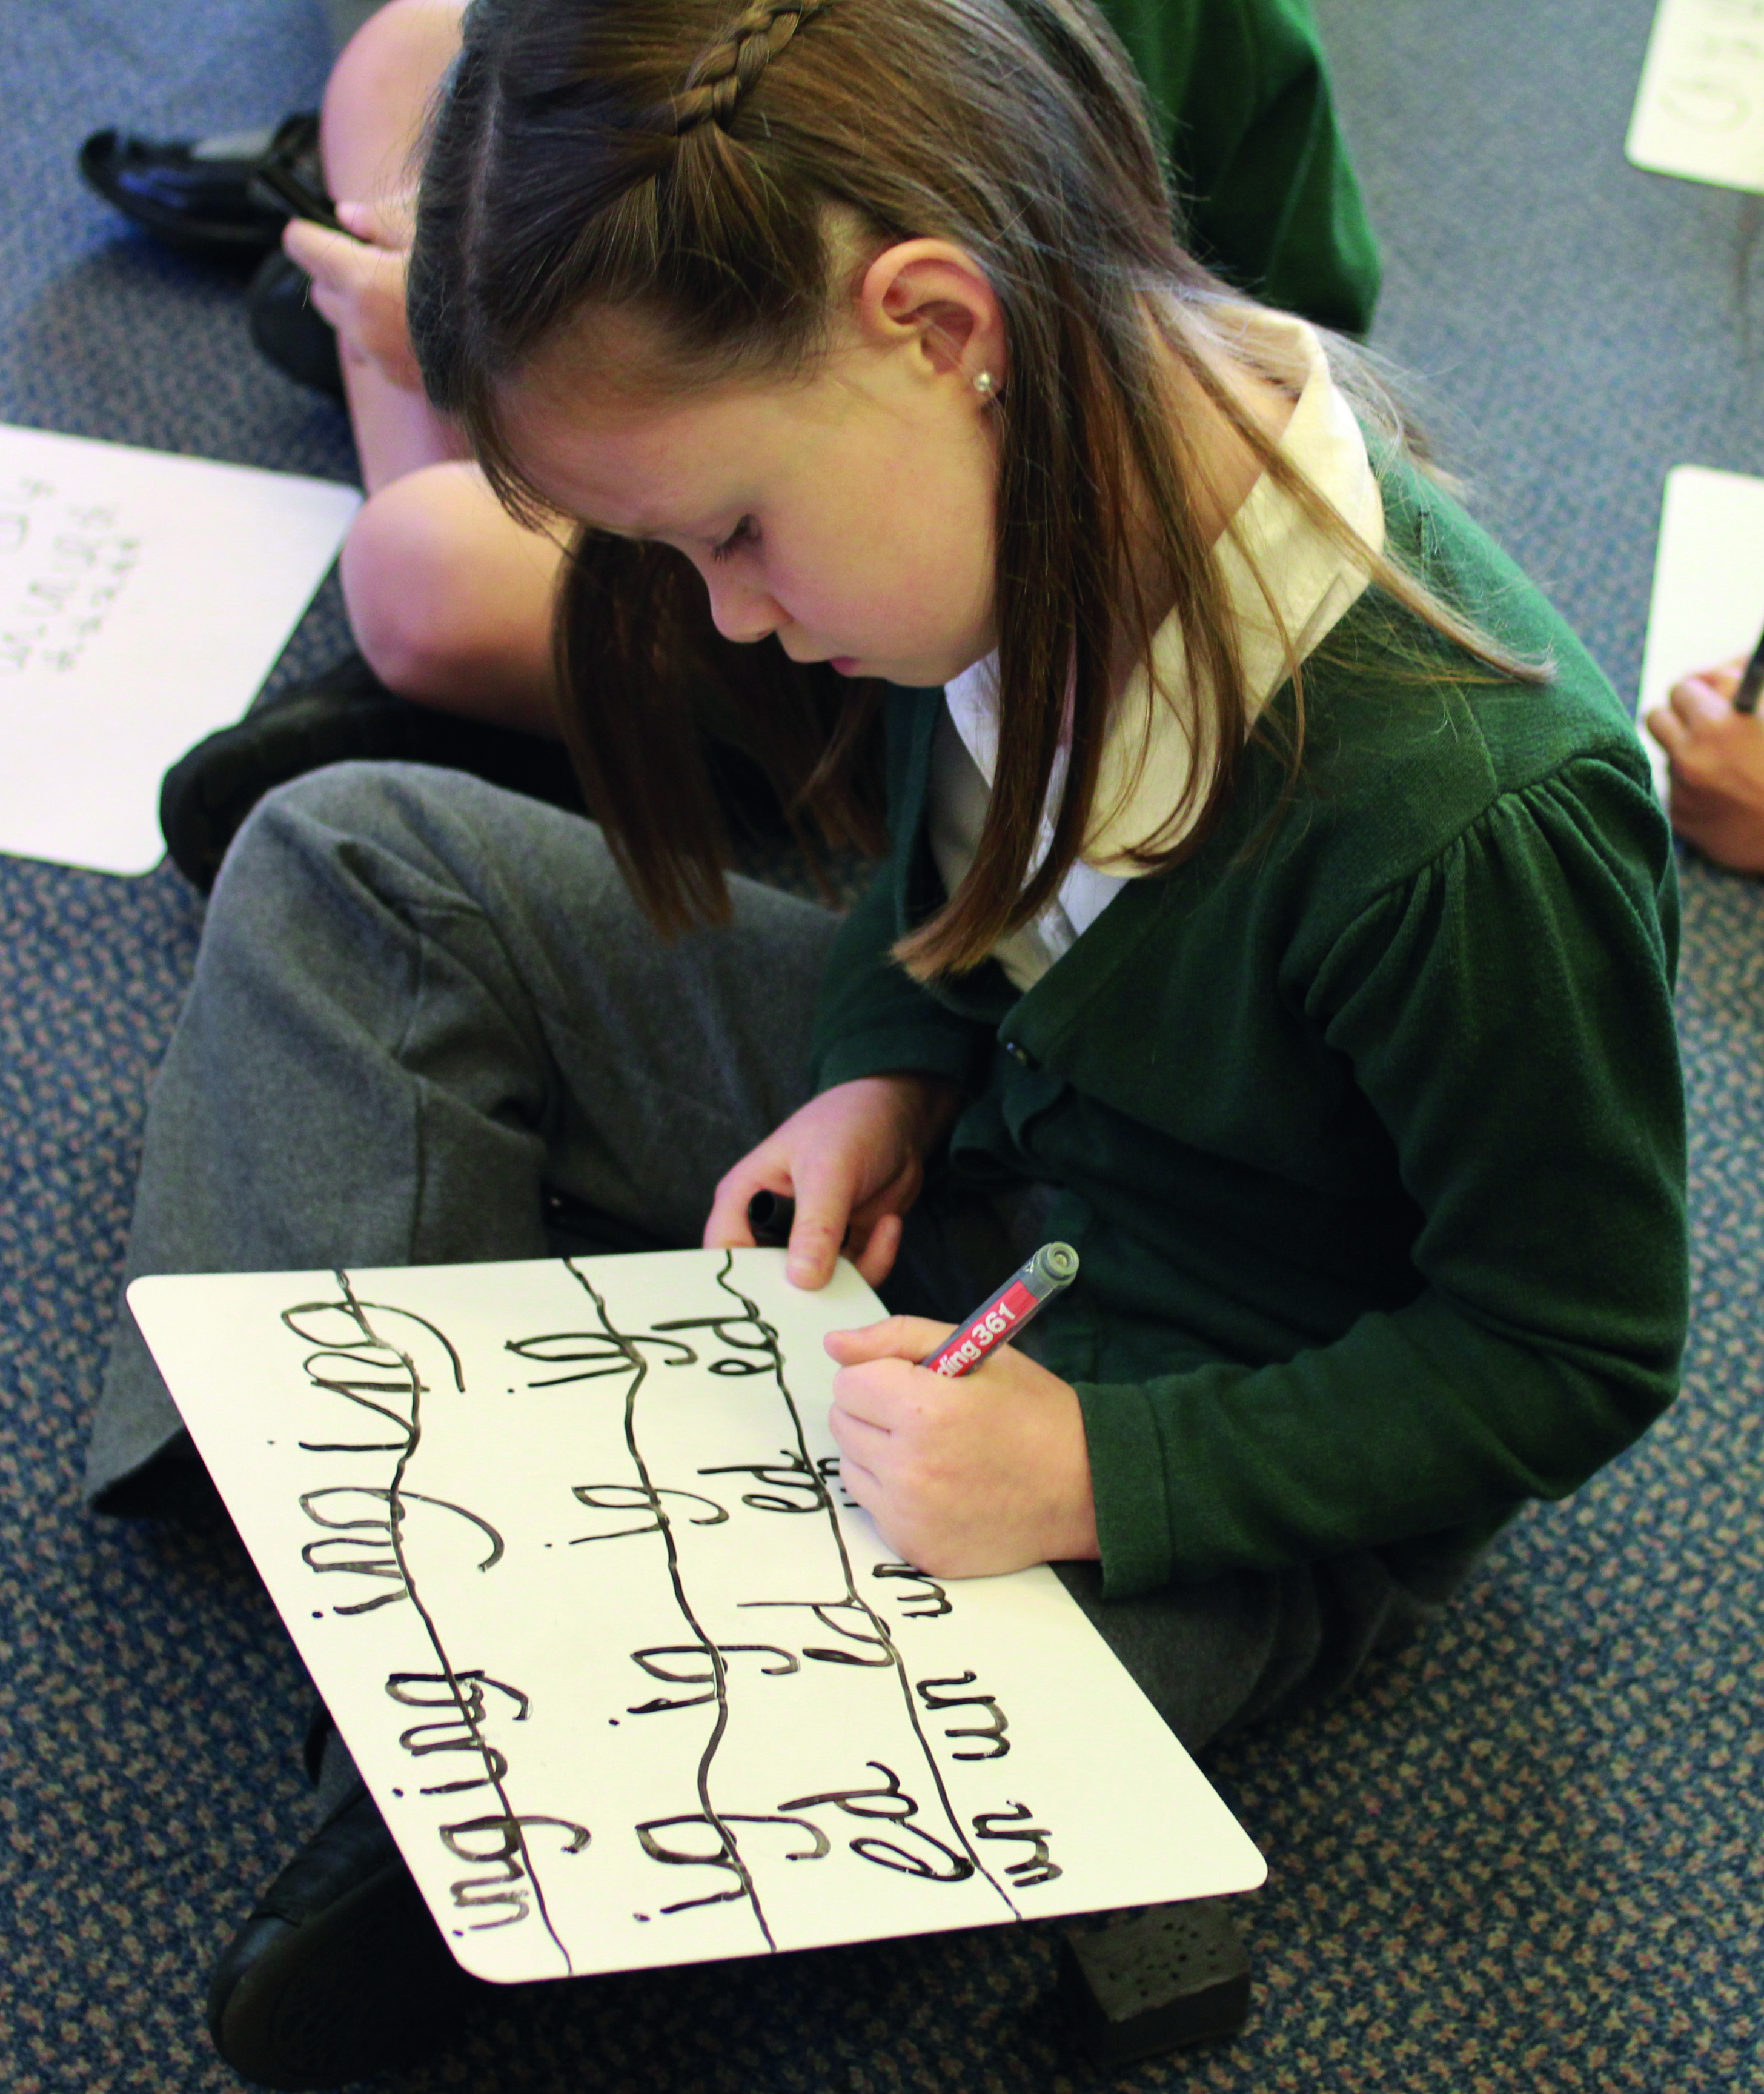 Girl writing graphemes on a whiteboard